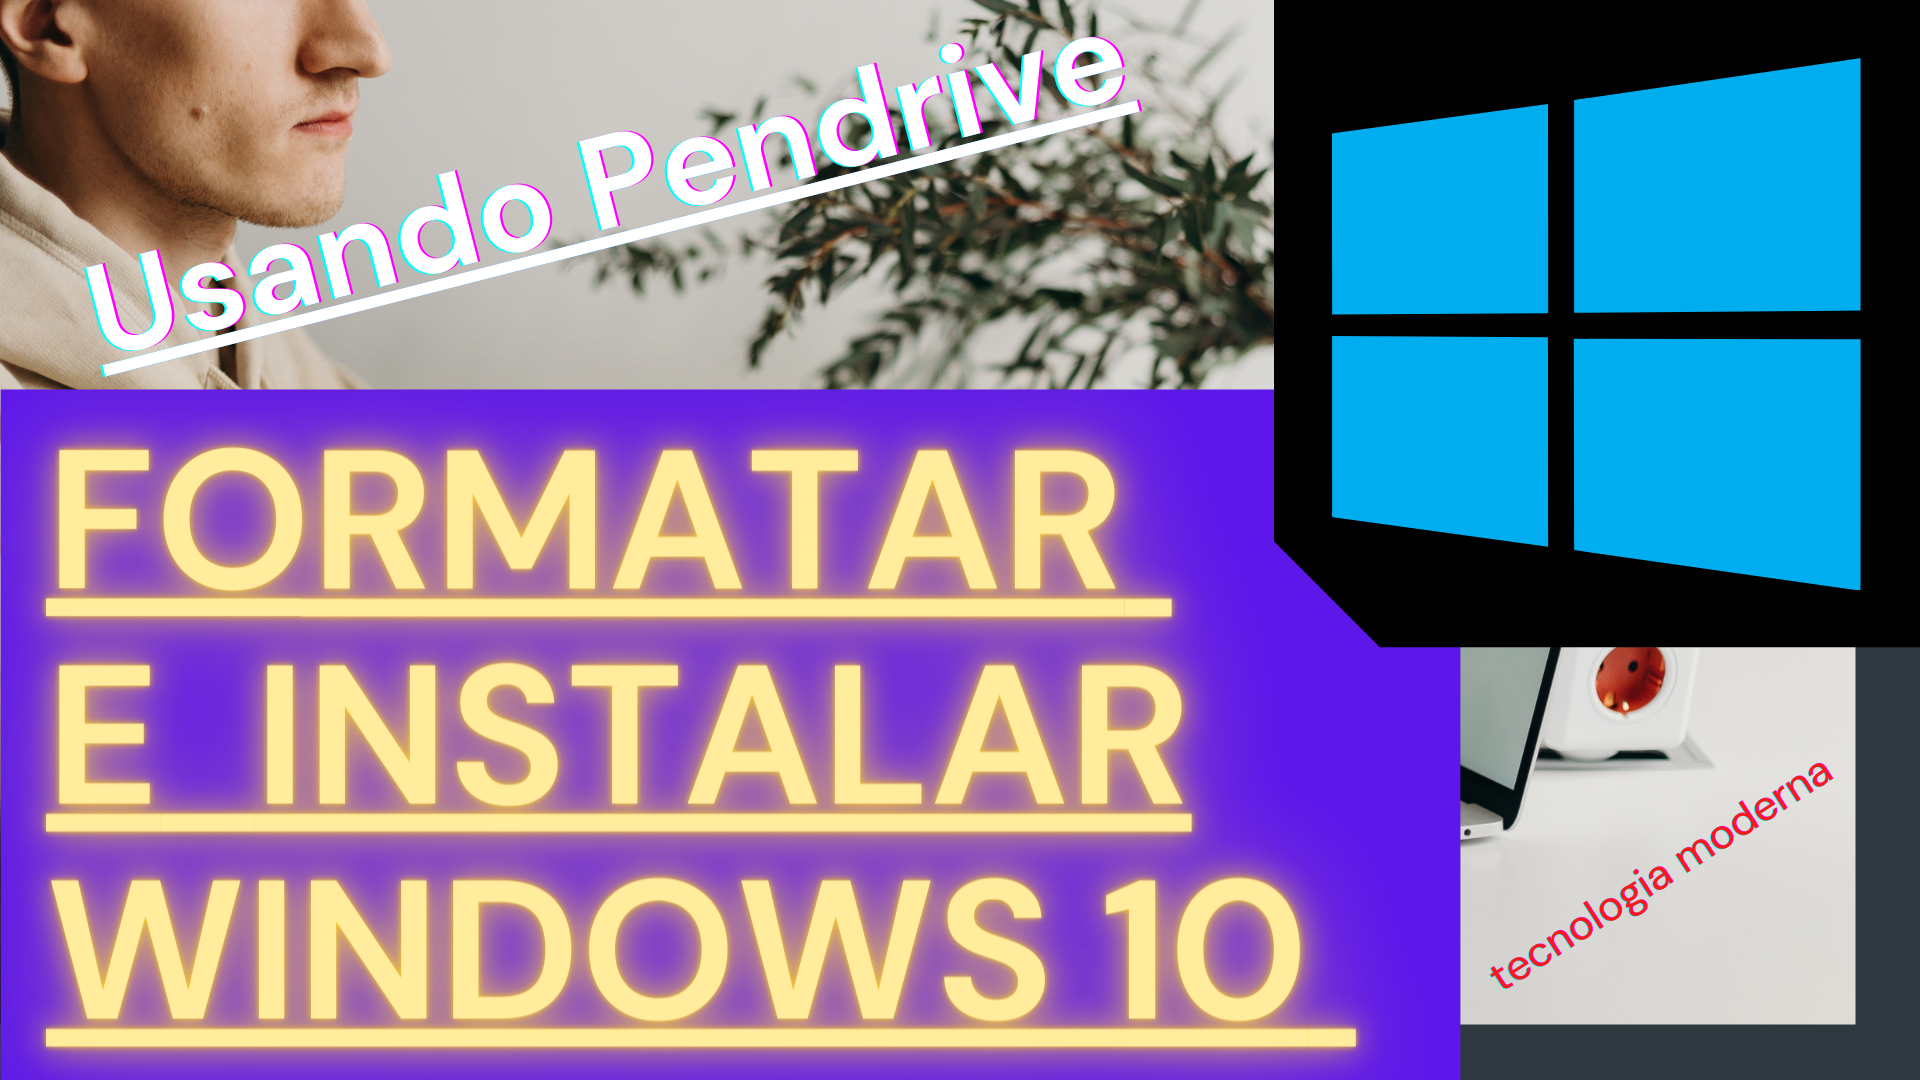 Formatar e instalar windows 10